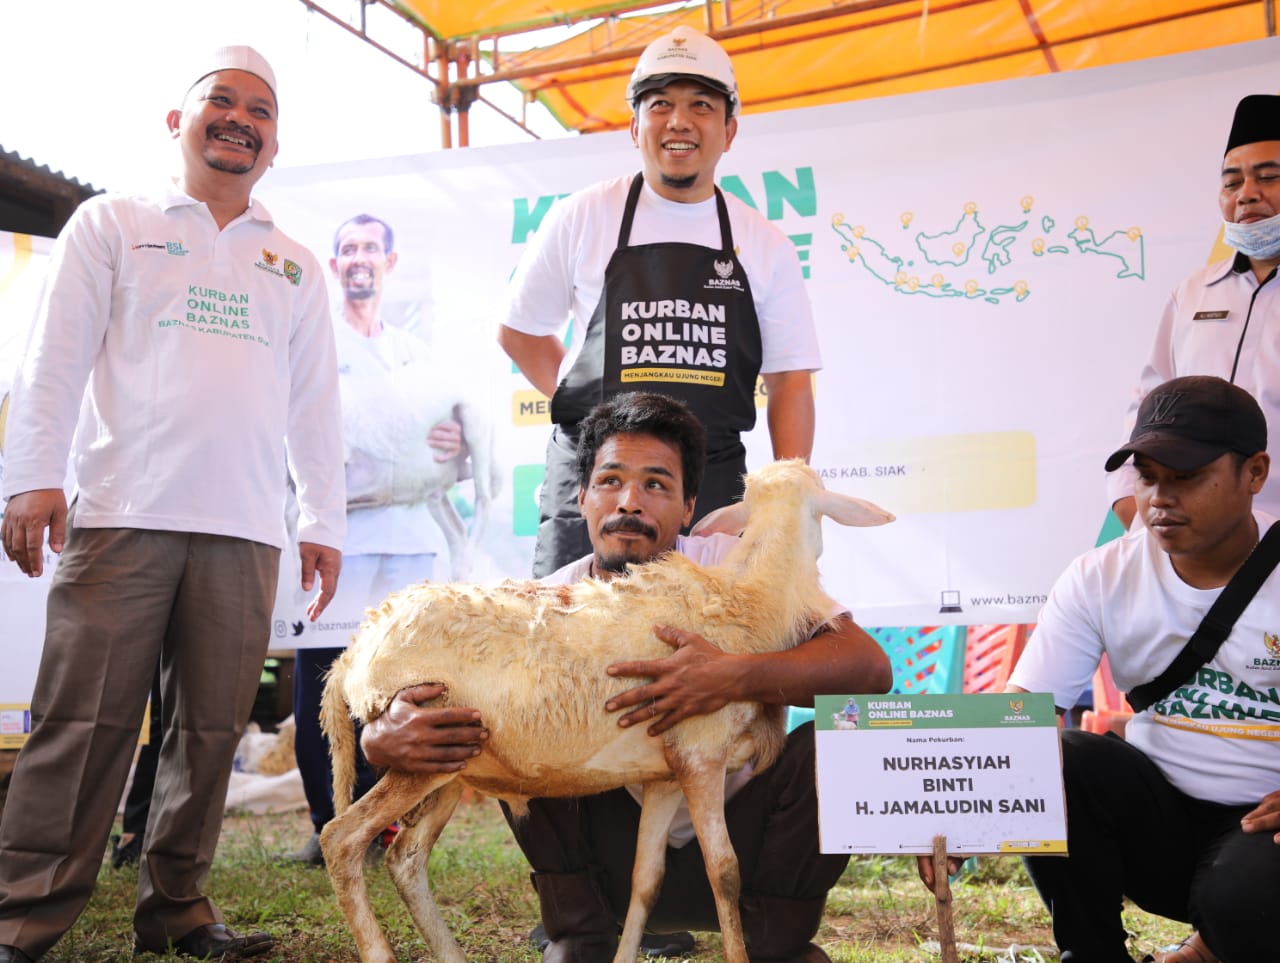 Baznas Pusat salurkan 100 Ekor Domba untuk Baznas Kabupaten Siak